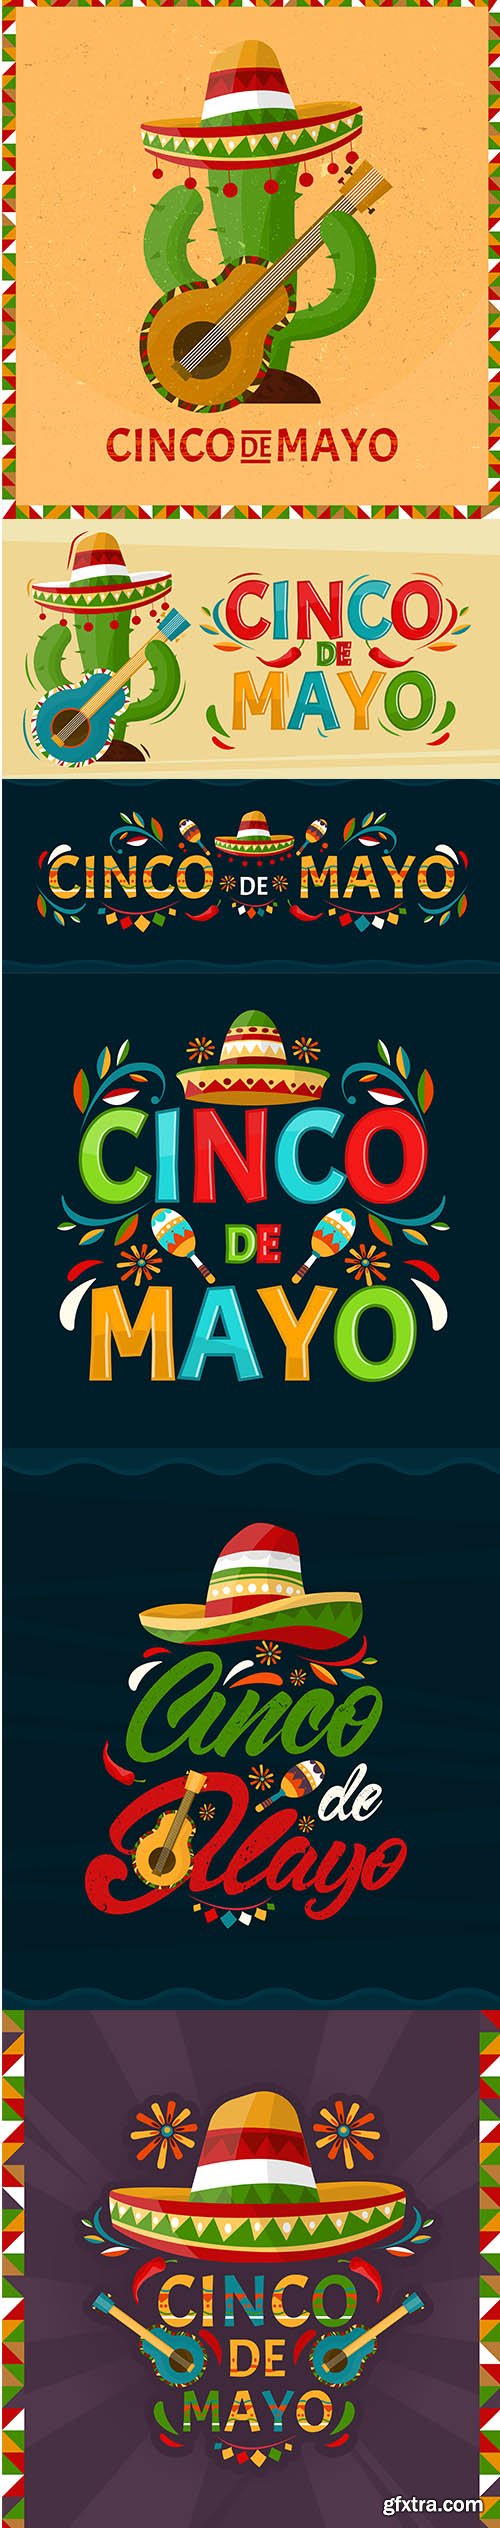 Cinco de Mayo Holiday Mexico Illustrations Set